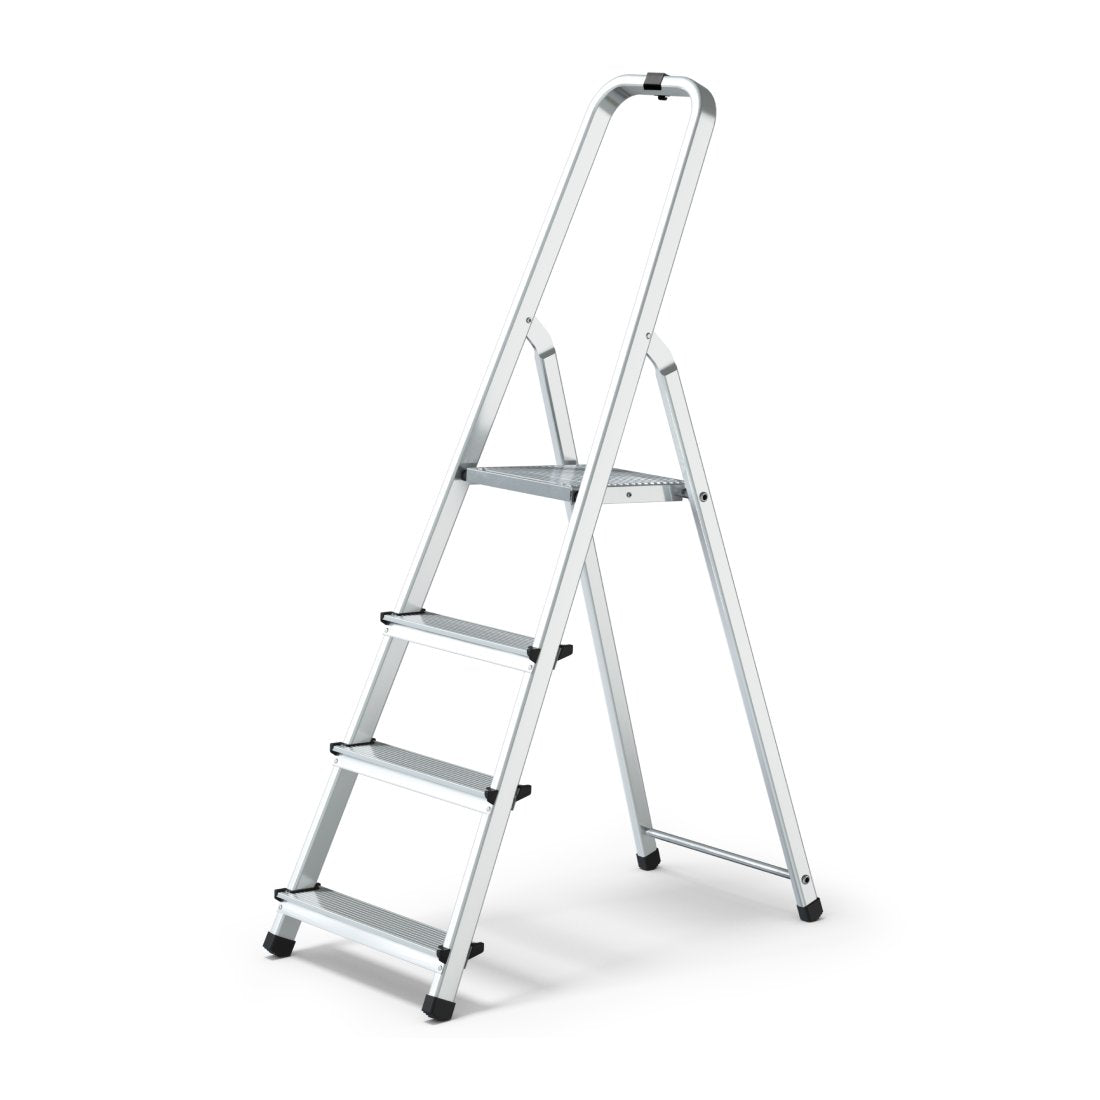 Escalera de plataforma de aluminio tipo I Reach PolStep de 9 pies - 275 lbs. Capacidad de carga